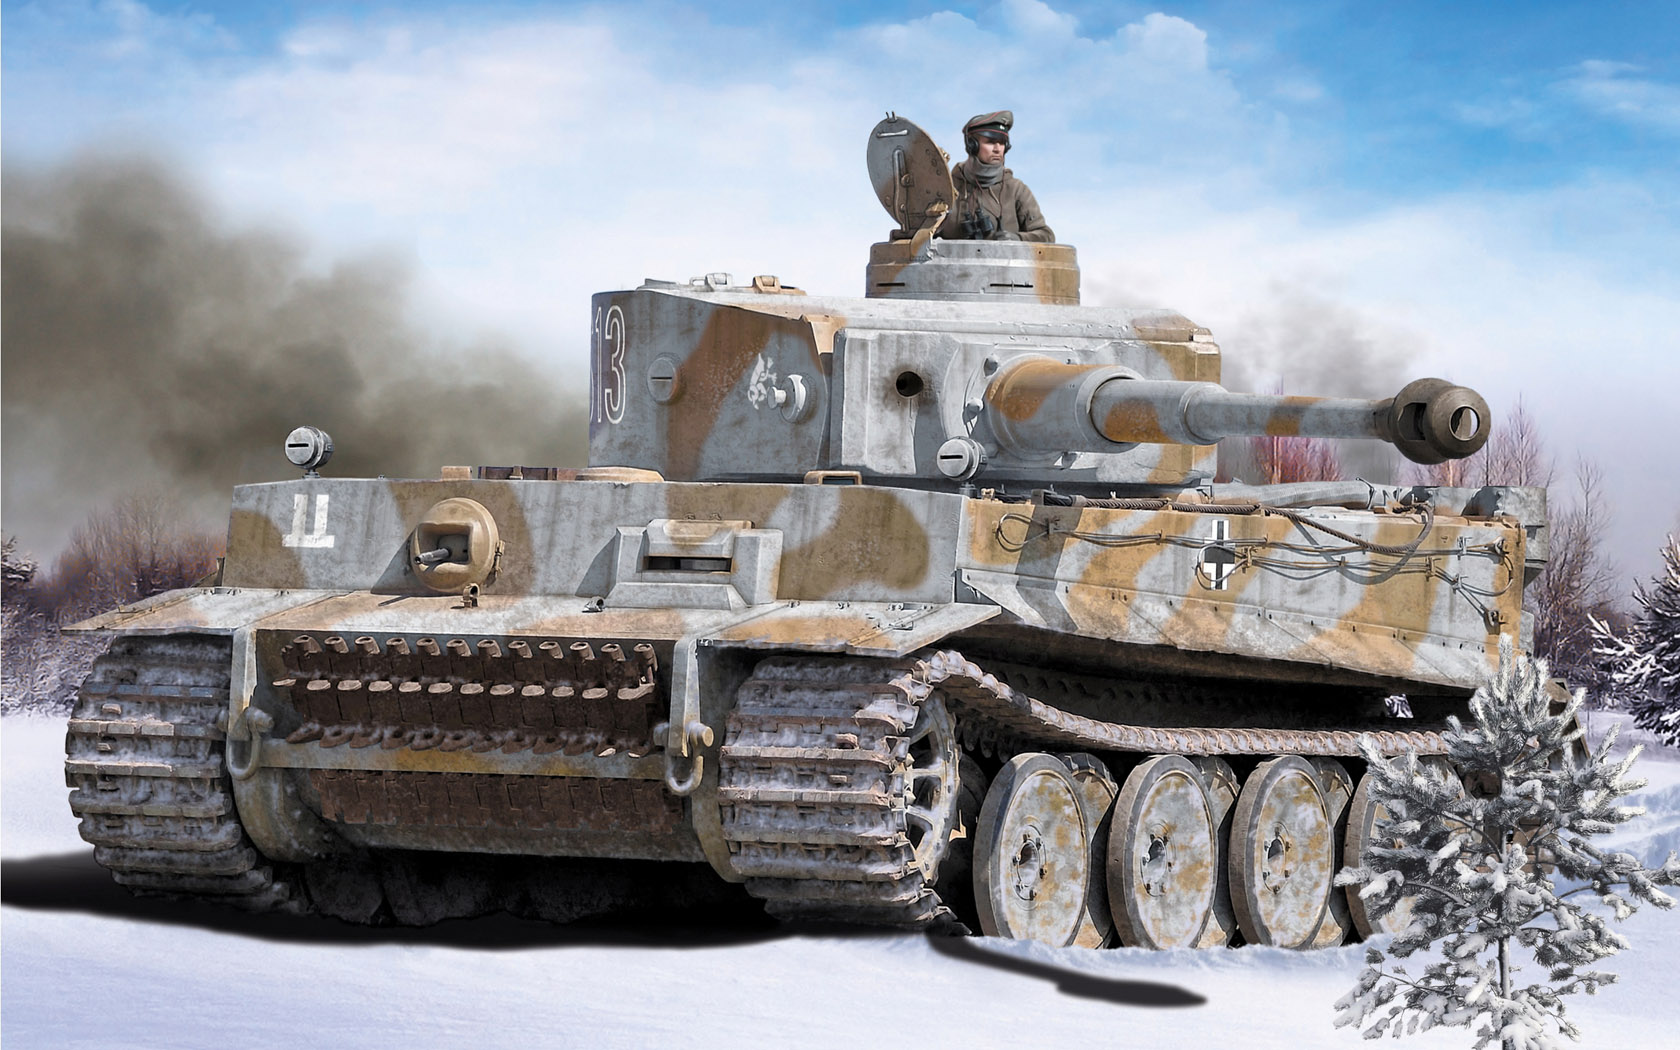 General 1680x1050 tank snow army military military vehicle artwork clouds soldier men hat headphones binoculars uniform Tiger I